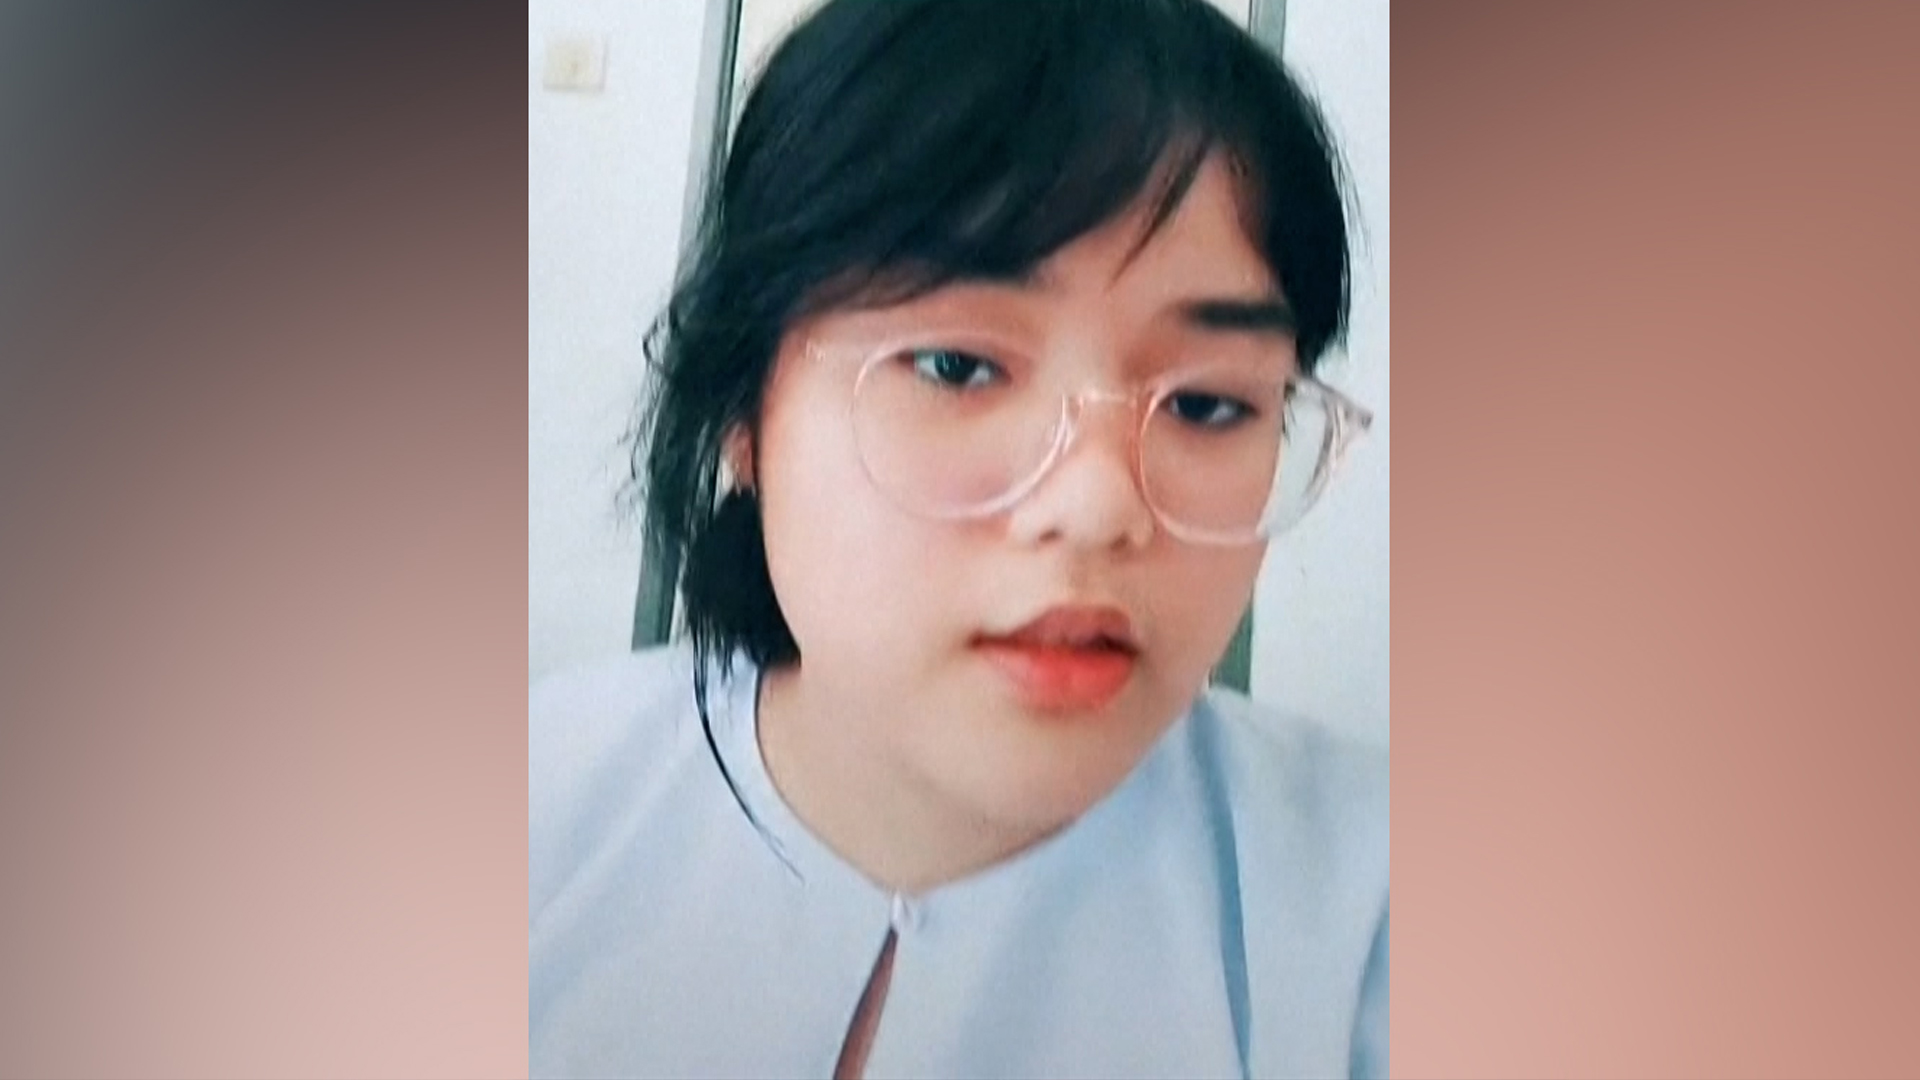 Www Xxx Com Techer Rape - Malaysian schoolgirl slams teacher's rape joke in viral TikTok video |  South China Morning Post